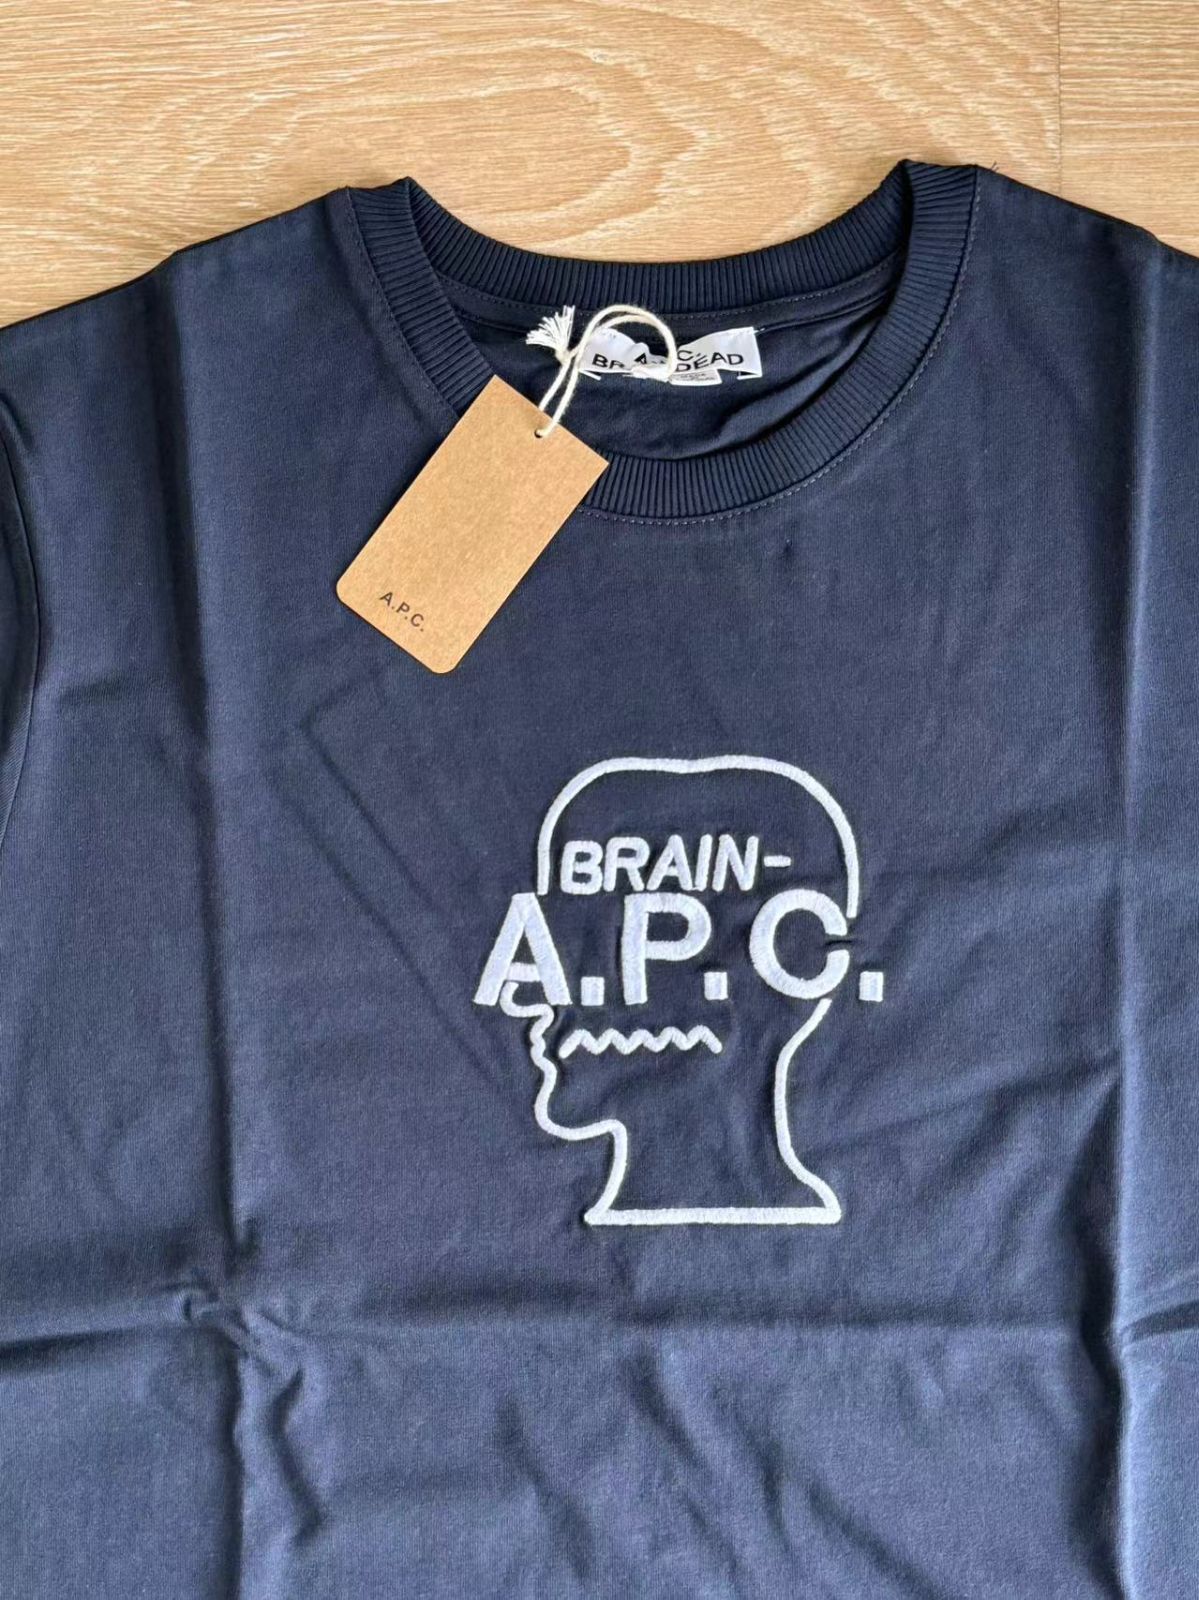 A.P.C. ✖ BRAIN DEAD Tシャツ アーペーセーコラボT シャツ半袖ダークネイビーＳサイズ